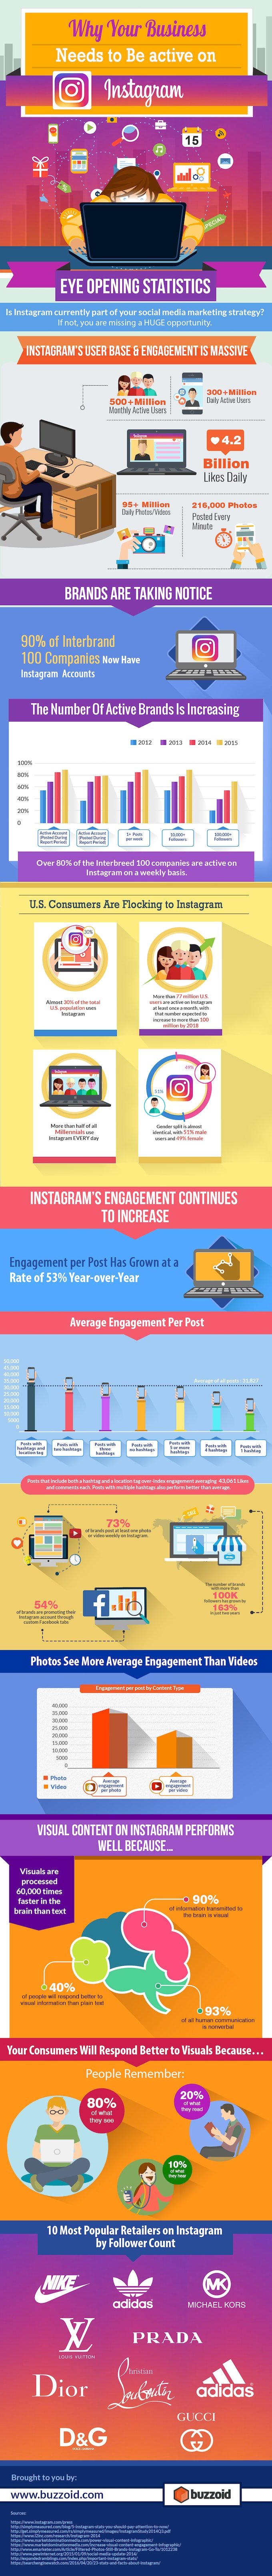 instagram-stats-infographic.jpg